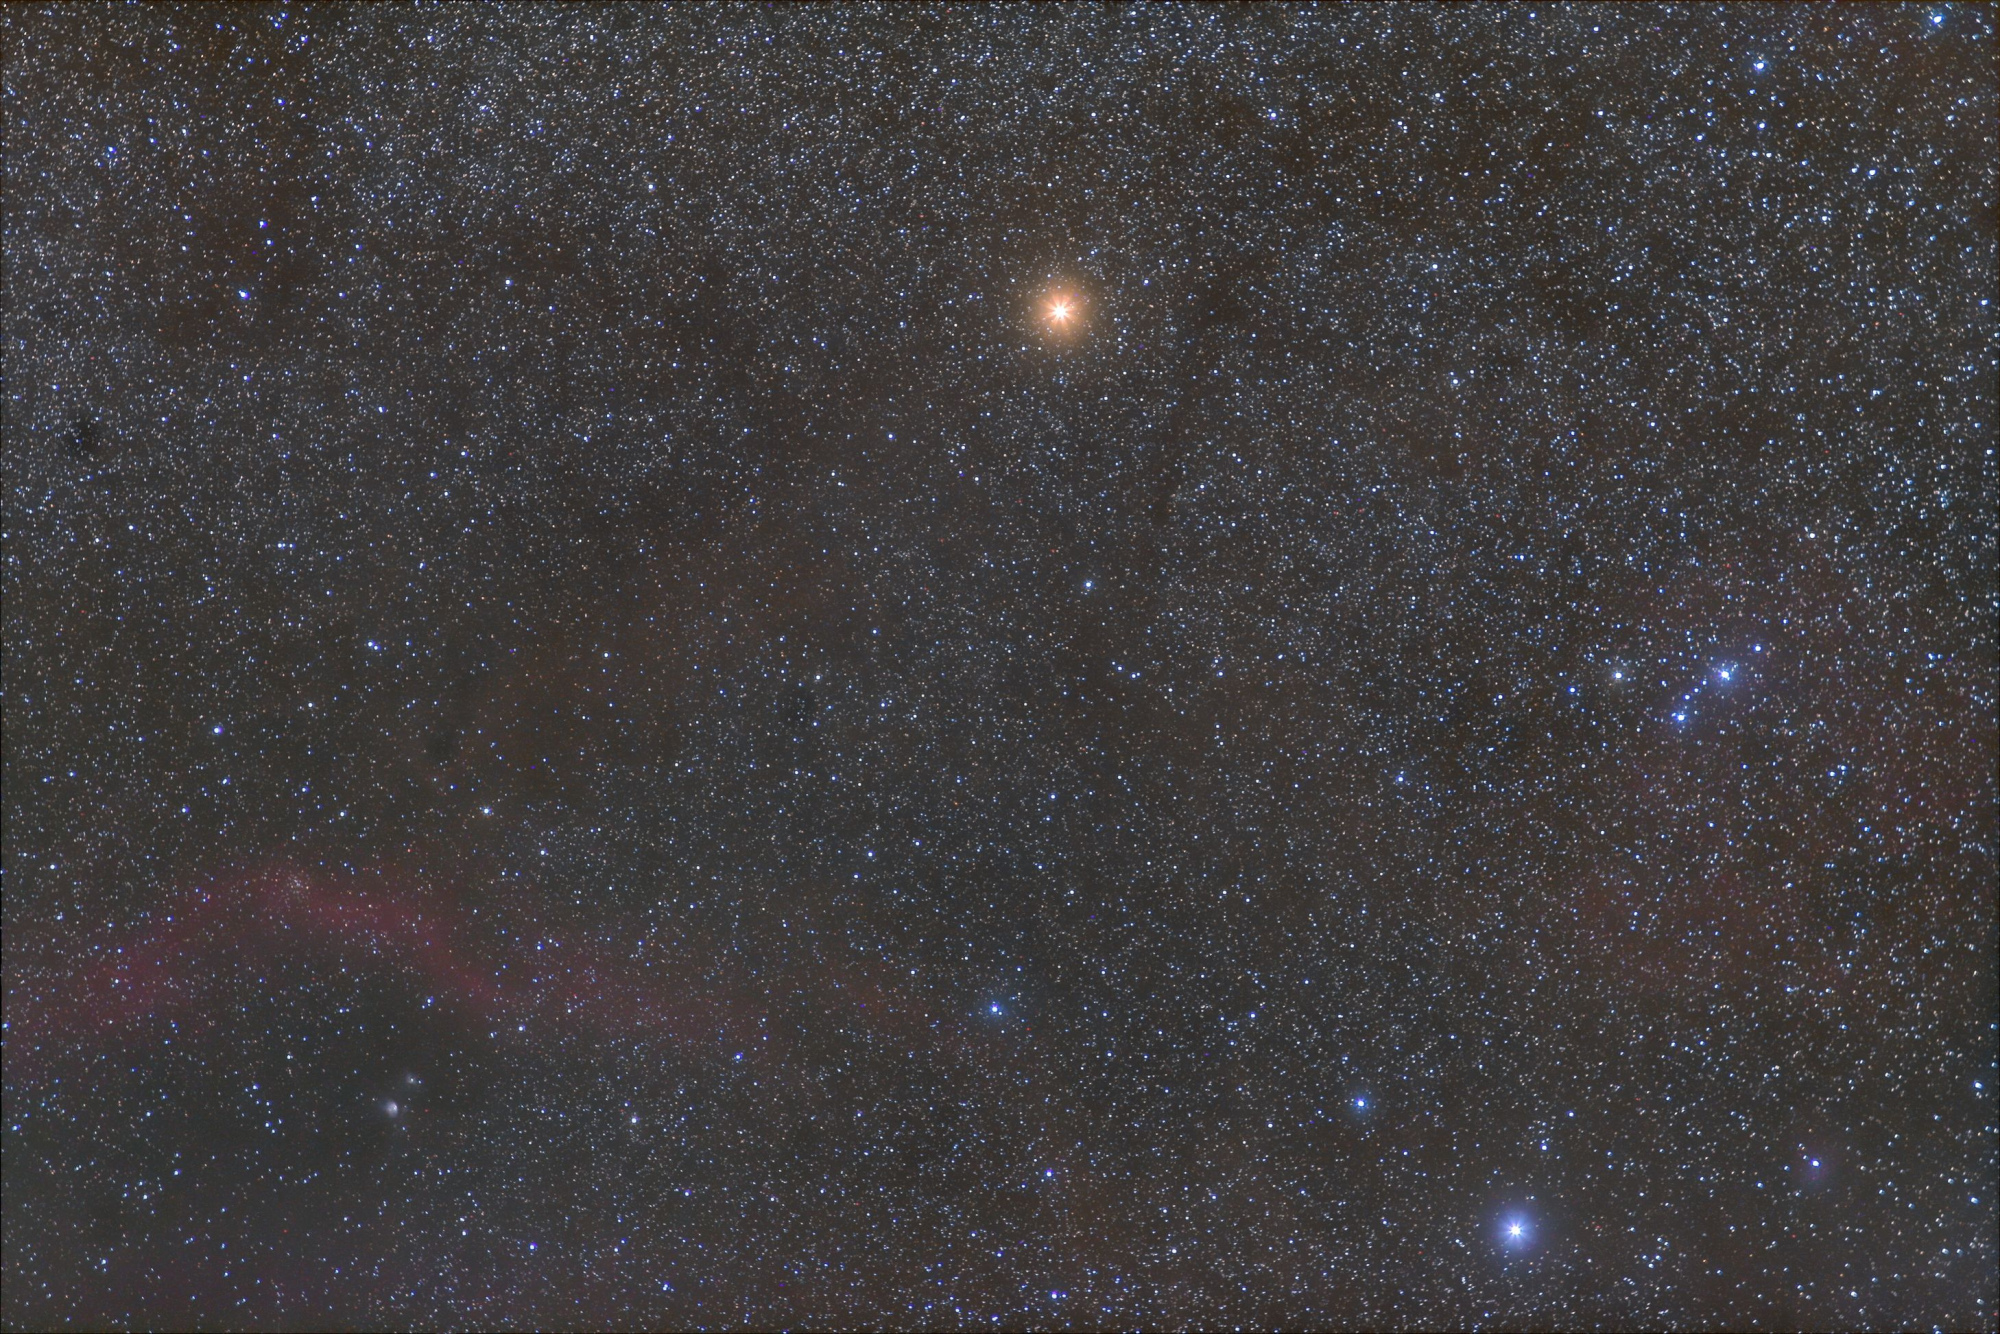 PANO M45 MARS 300319 85 800 2.8 15MN 3 (2).jpg